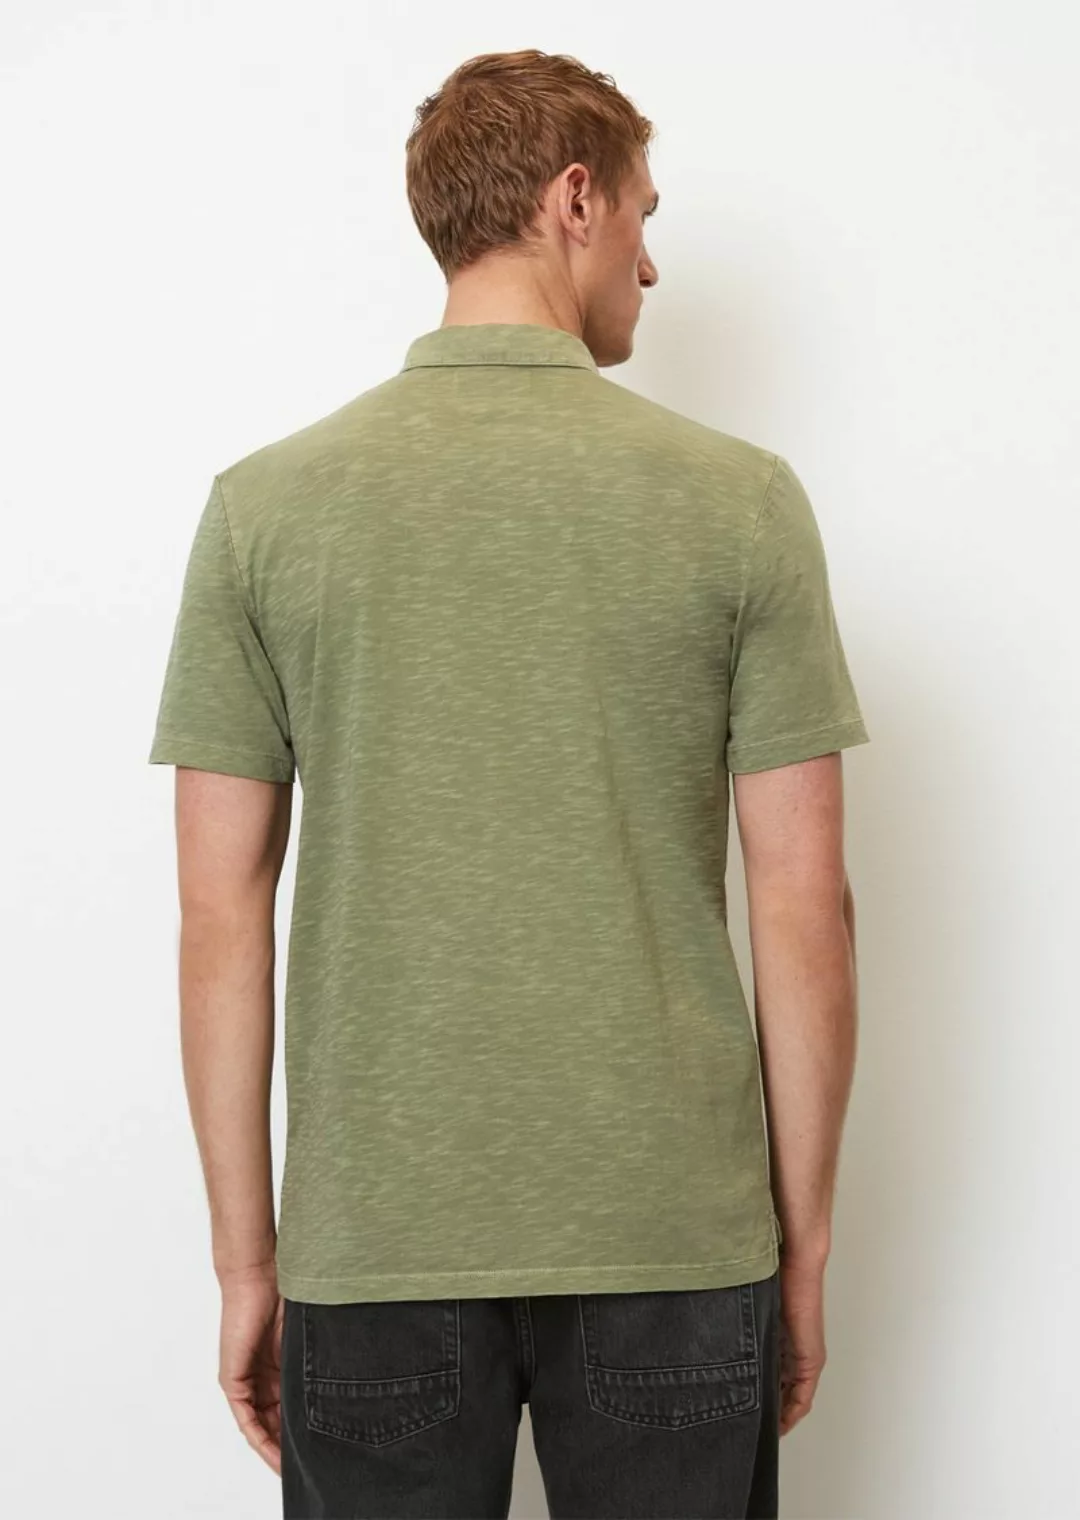 Marc O'Polo Polohemd Melange Oliv Grün - Größe L günstig online kaufen